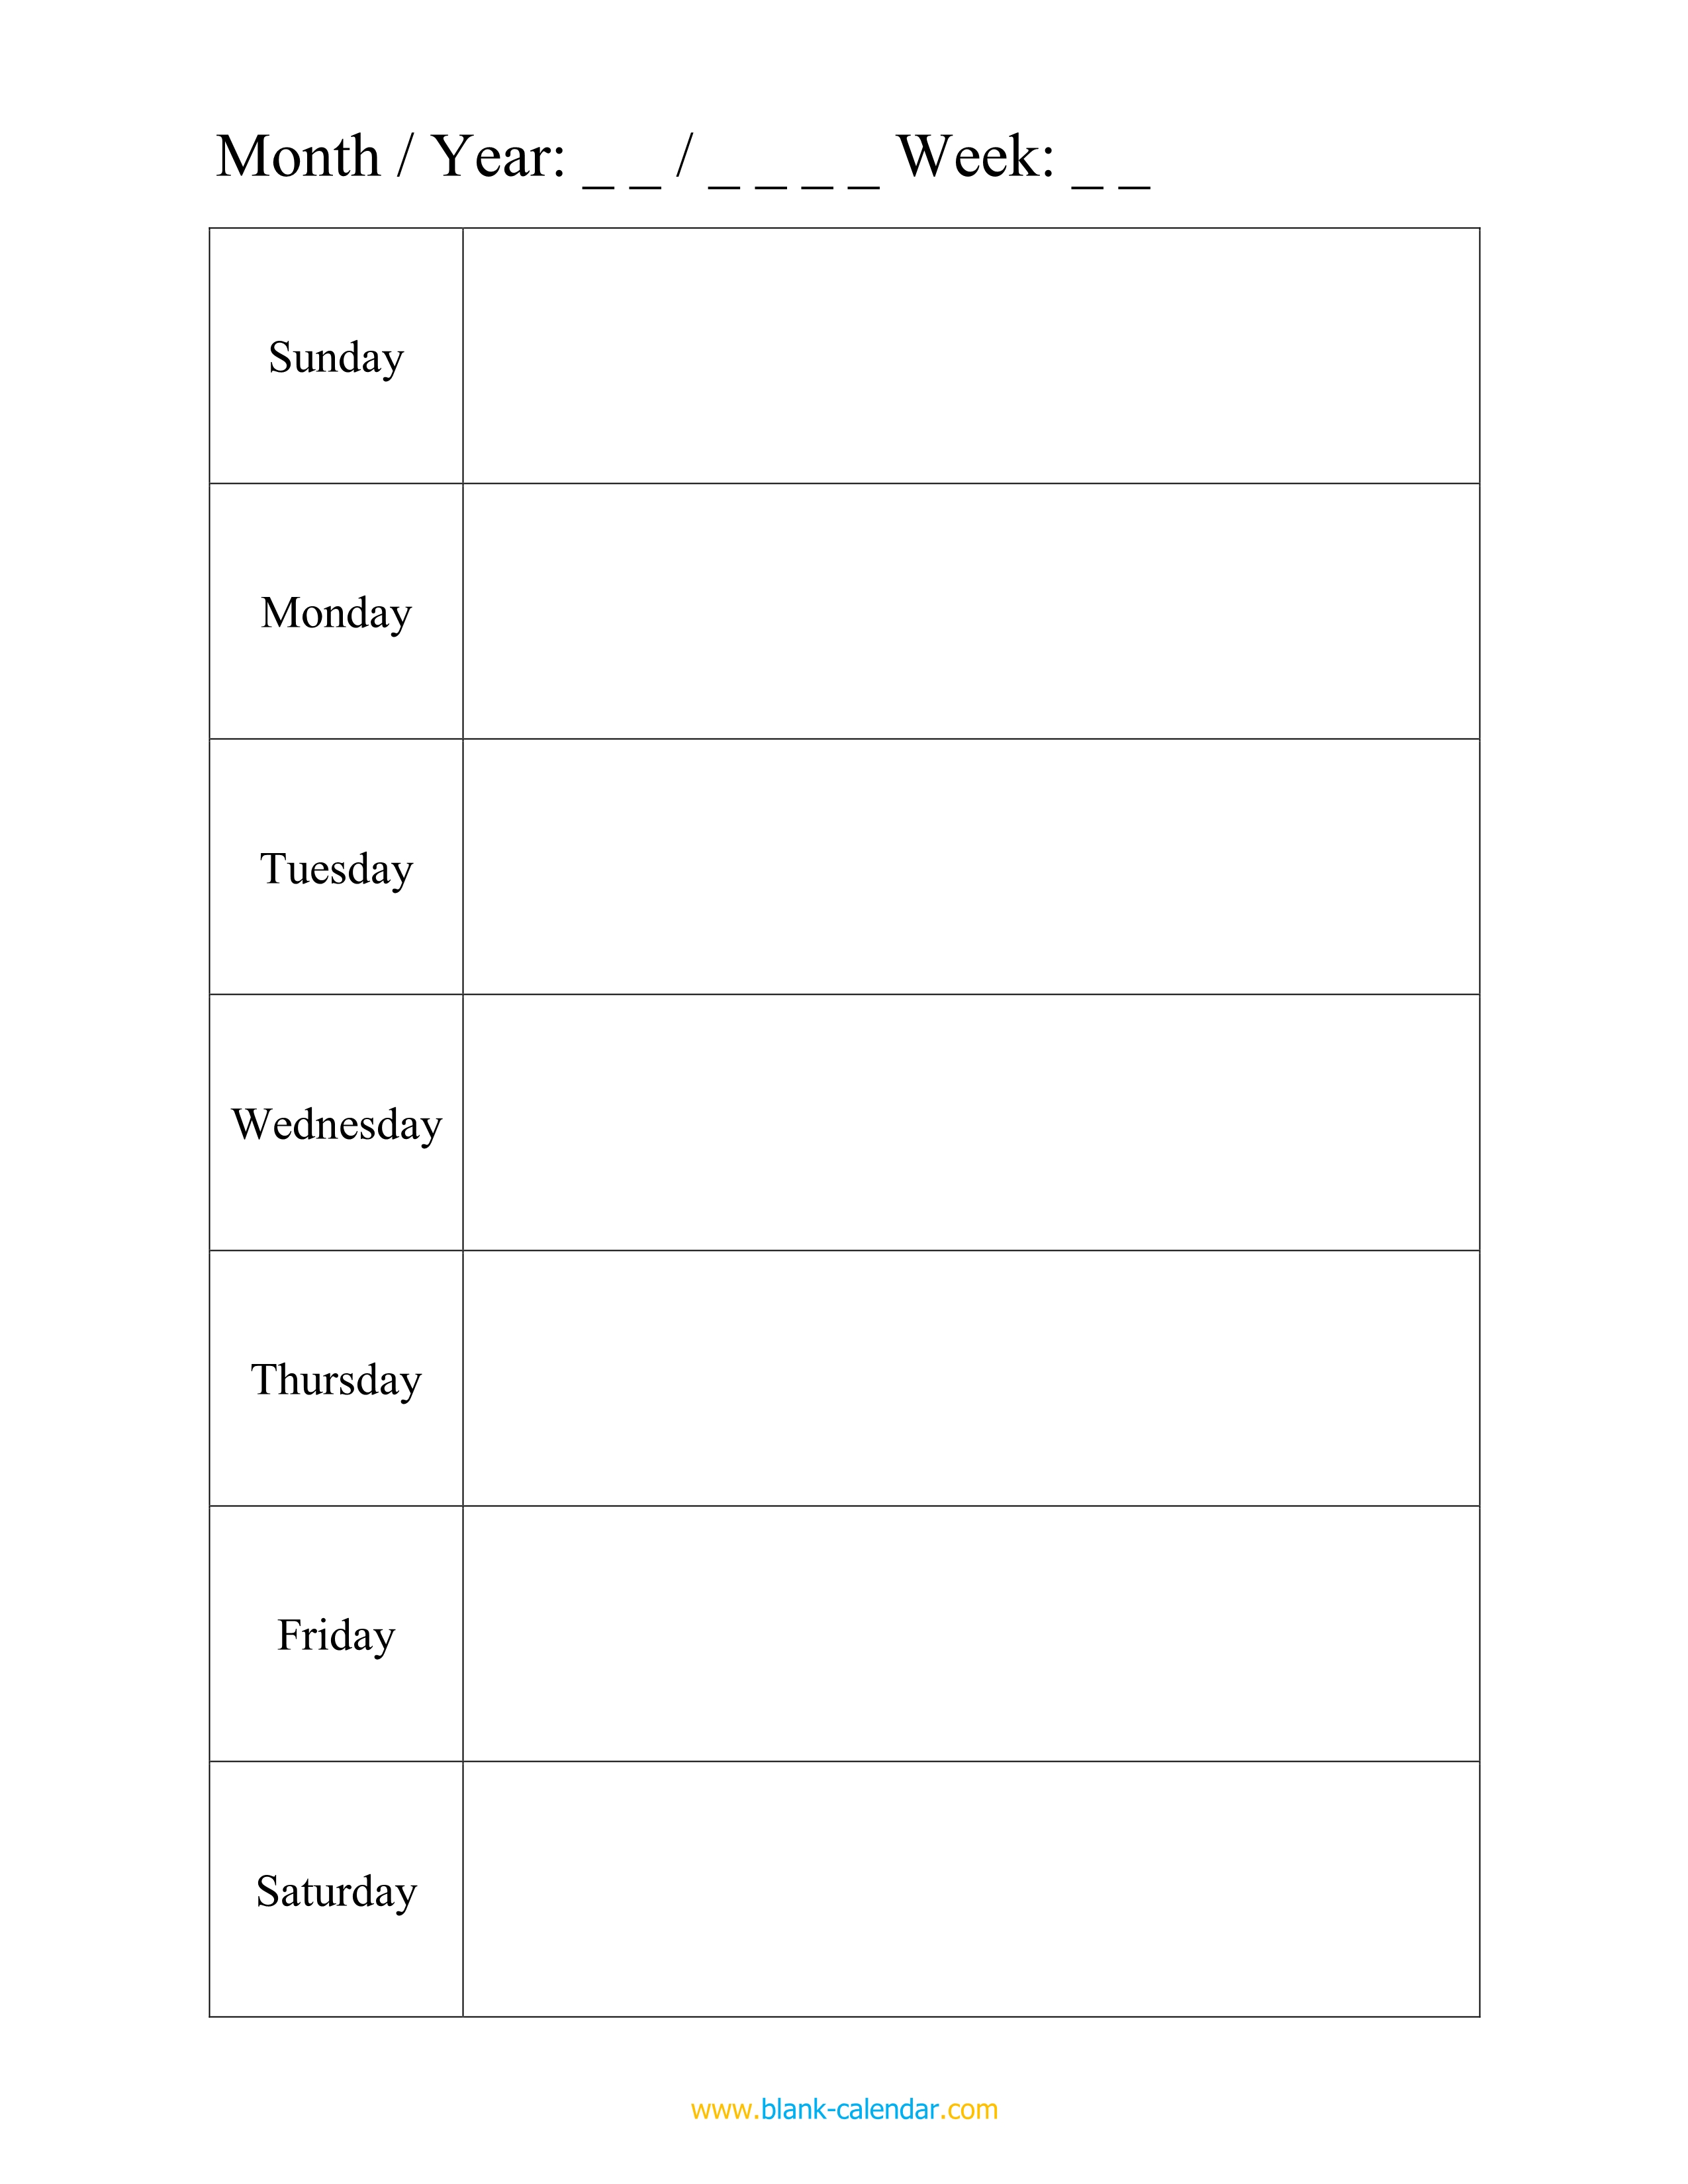 Weekly Schedule Planner Template from www.blank-calendar.com